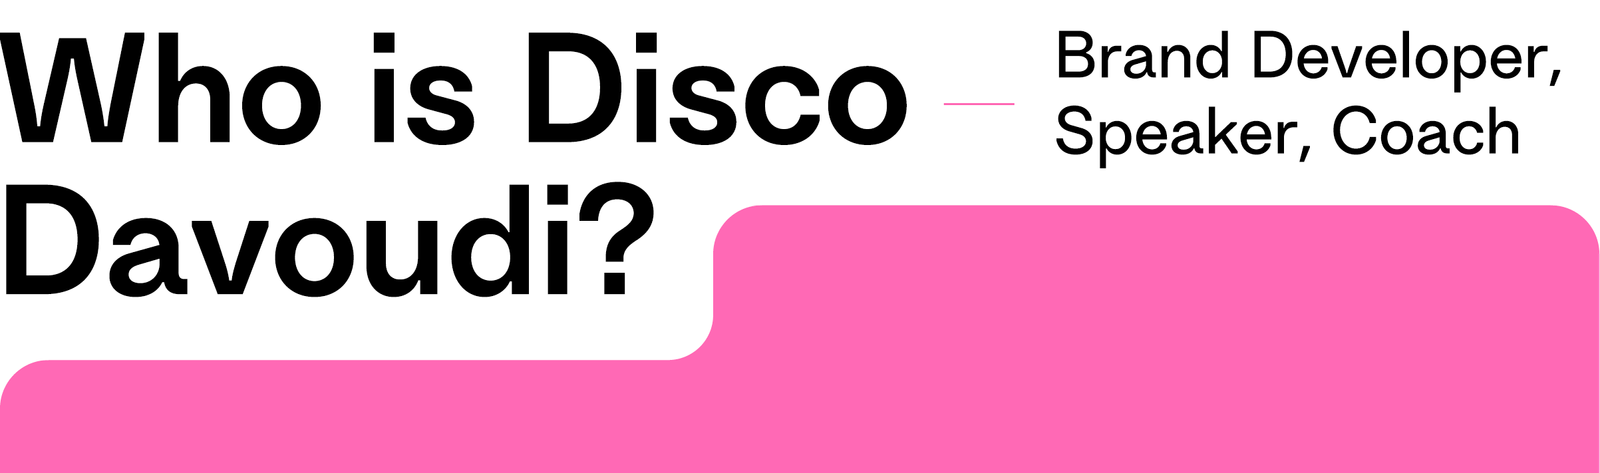 Who is Disco Davoudi? Brand Developer, Speaker, Coach